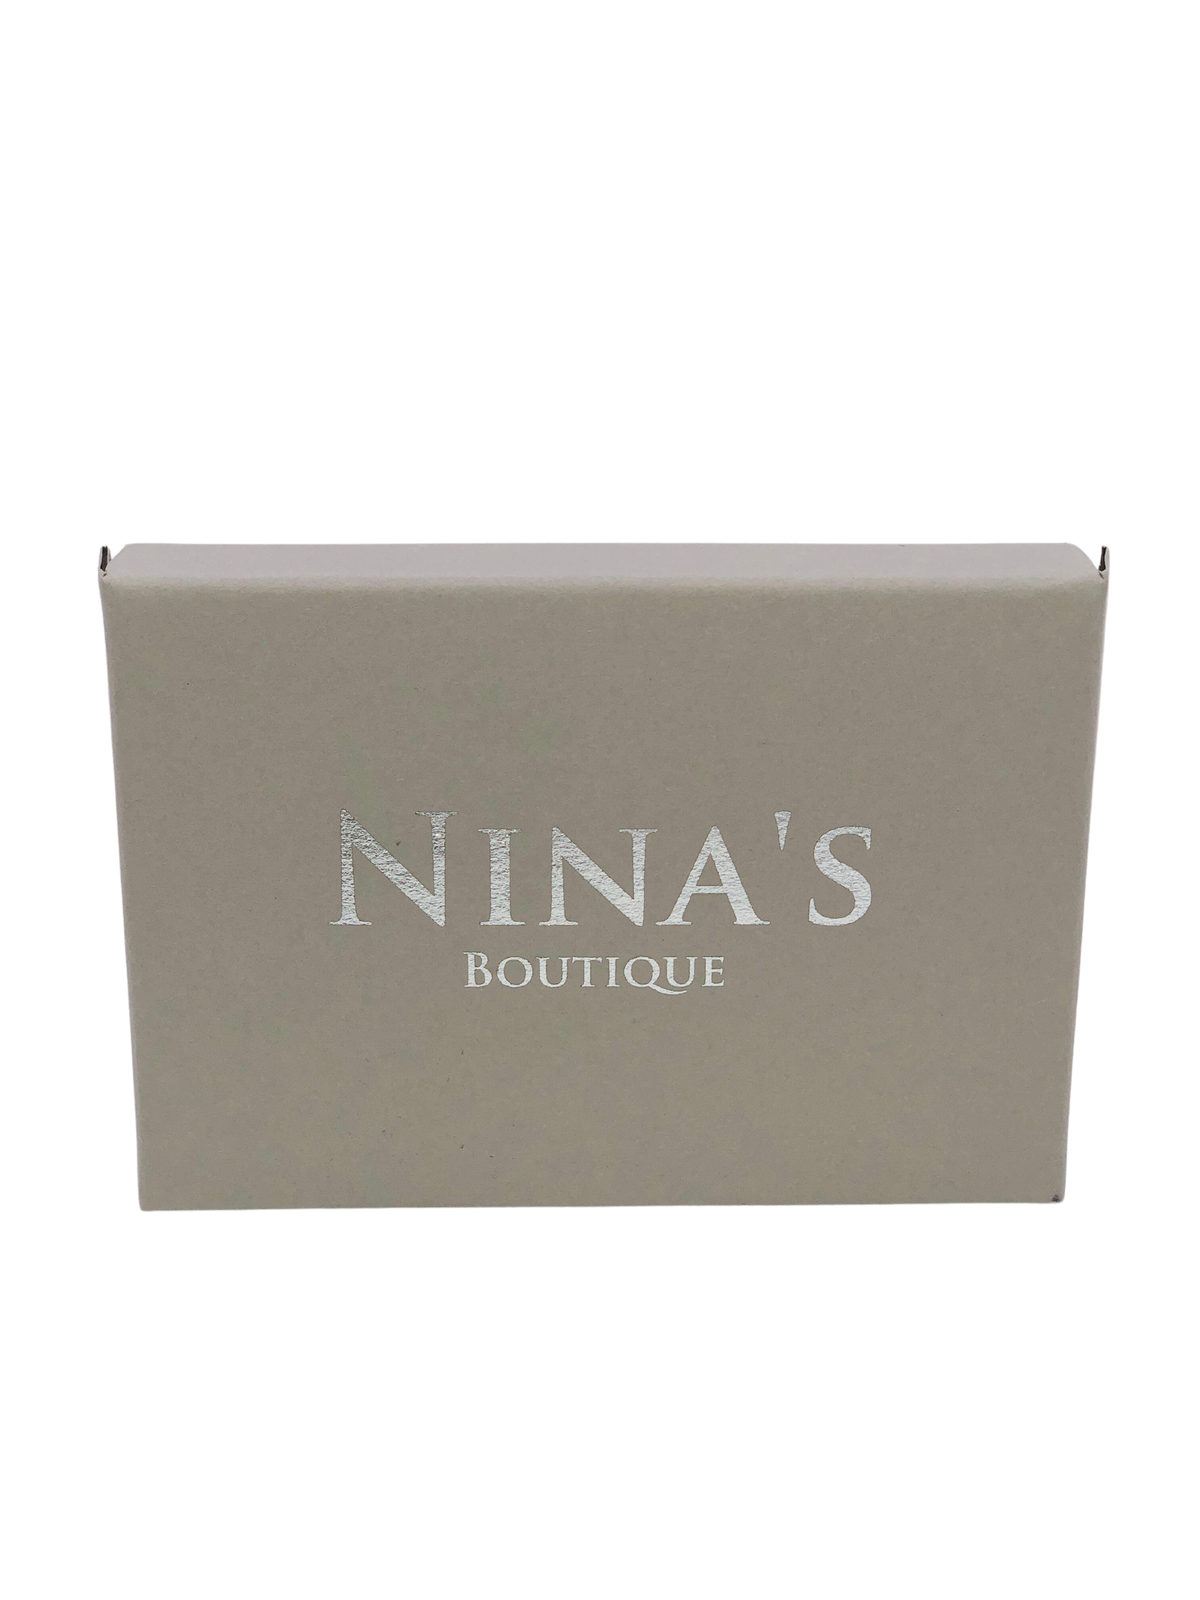 Nina's Boutique Gift Card